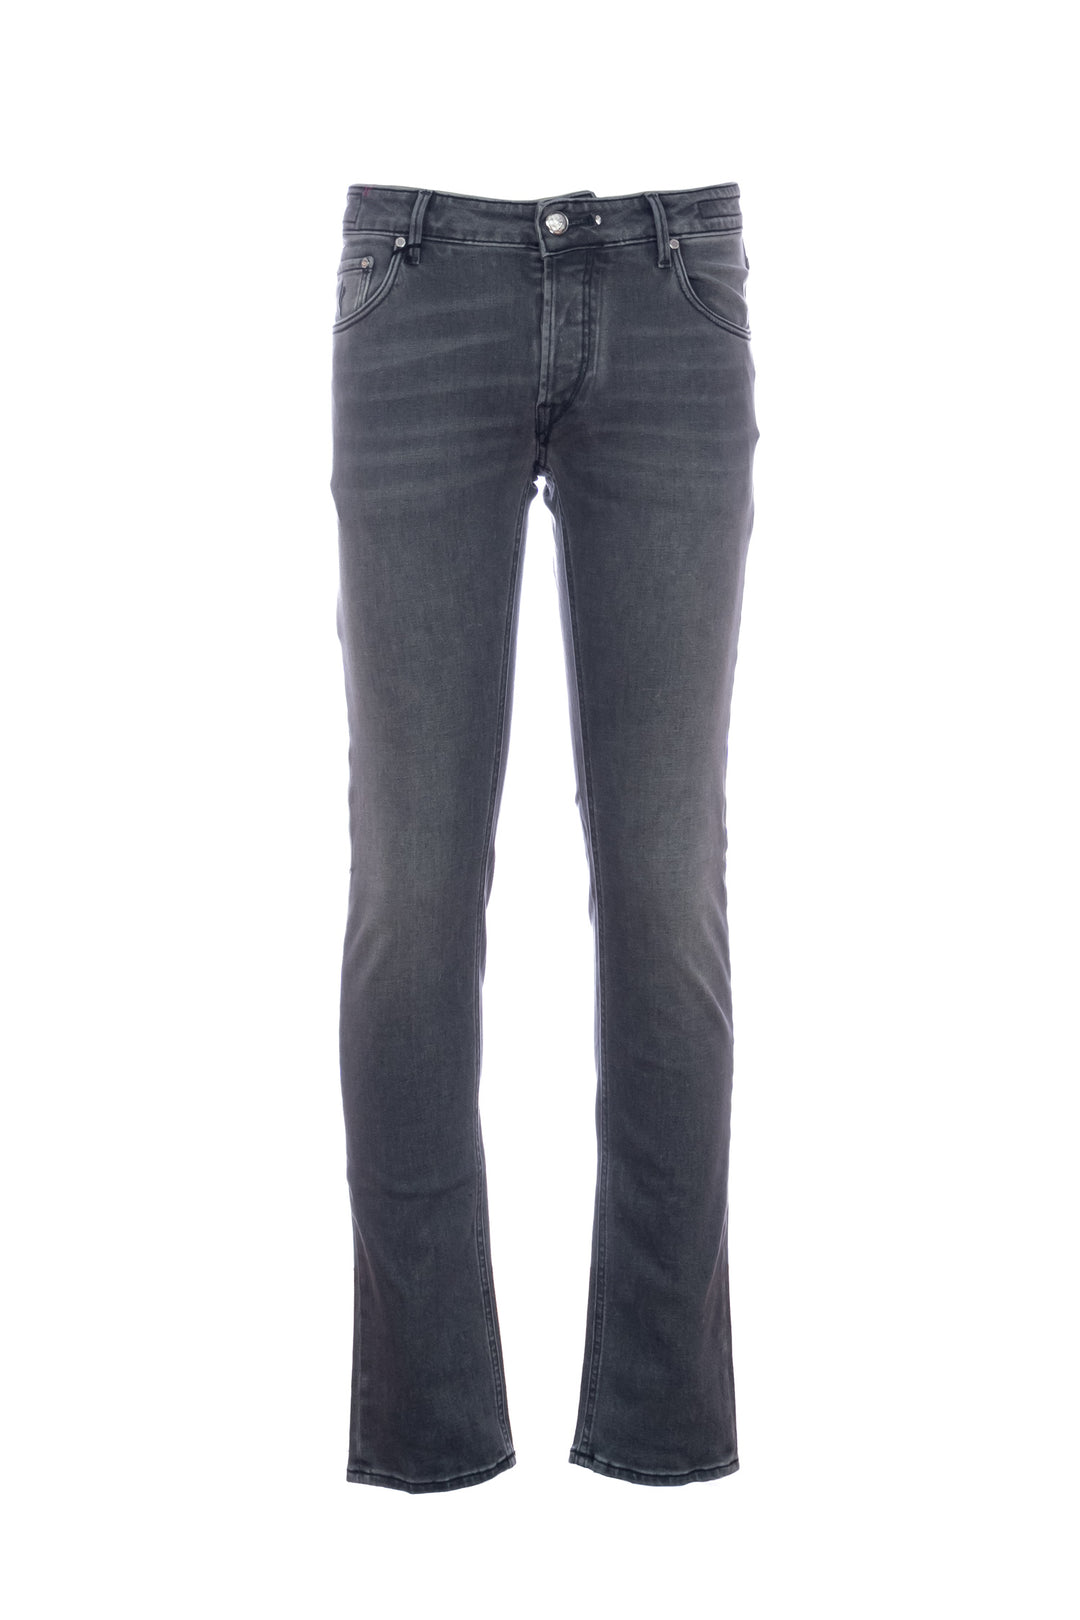 HANDPICKED Jeans 5 tasche “ORVIETO” in denim stretch lavaggio scuro - Mancinelli 1954